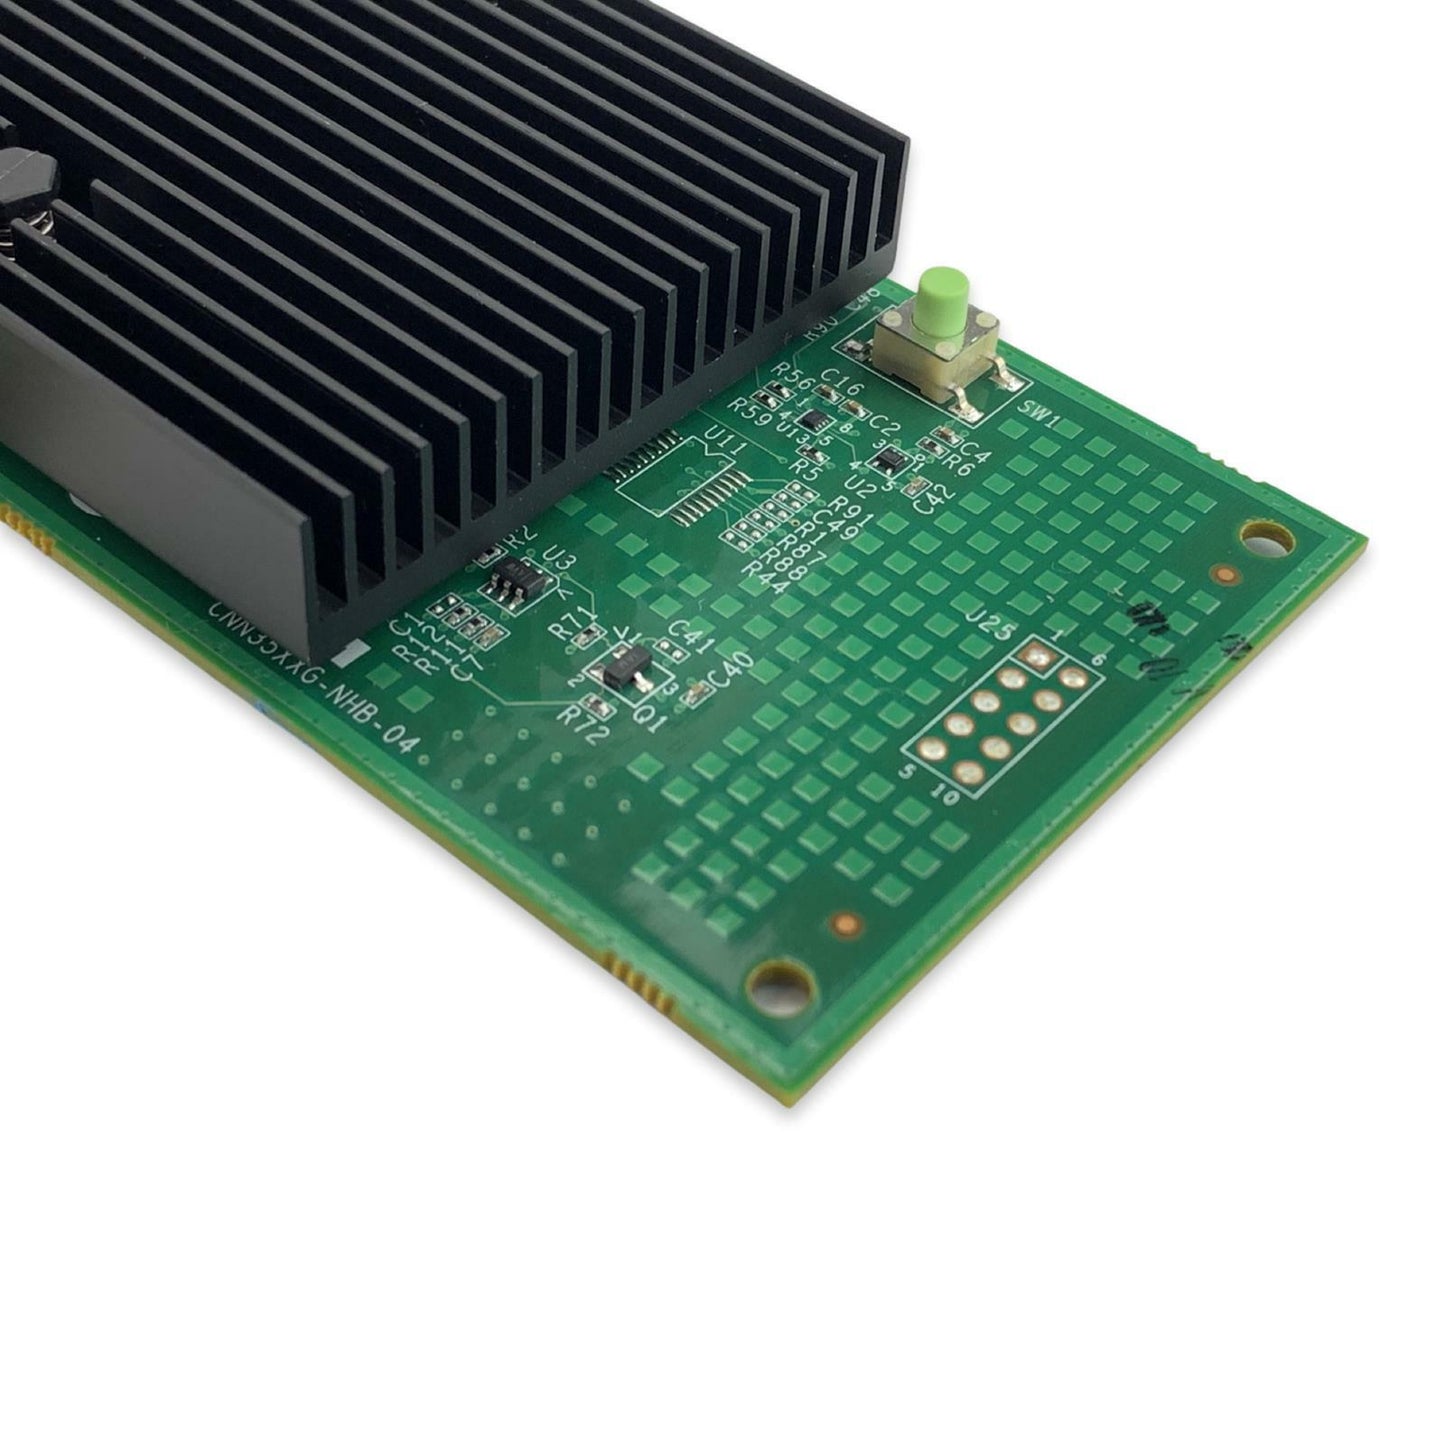 Cavium Nitrox3 PX NHB CNN3550-NHB-2.0-G PCIe Acceleration Board